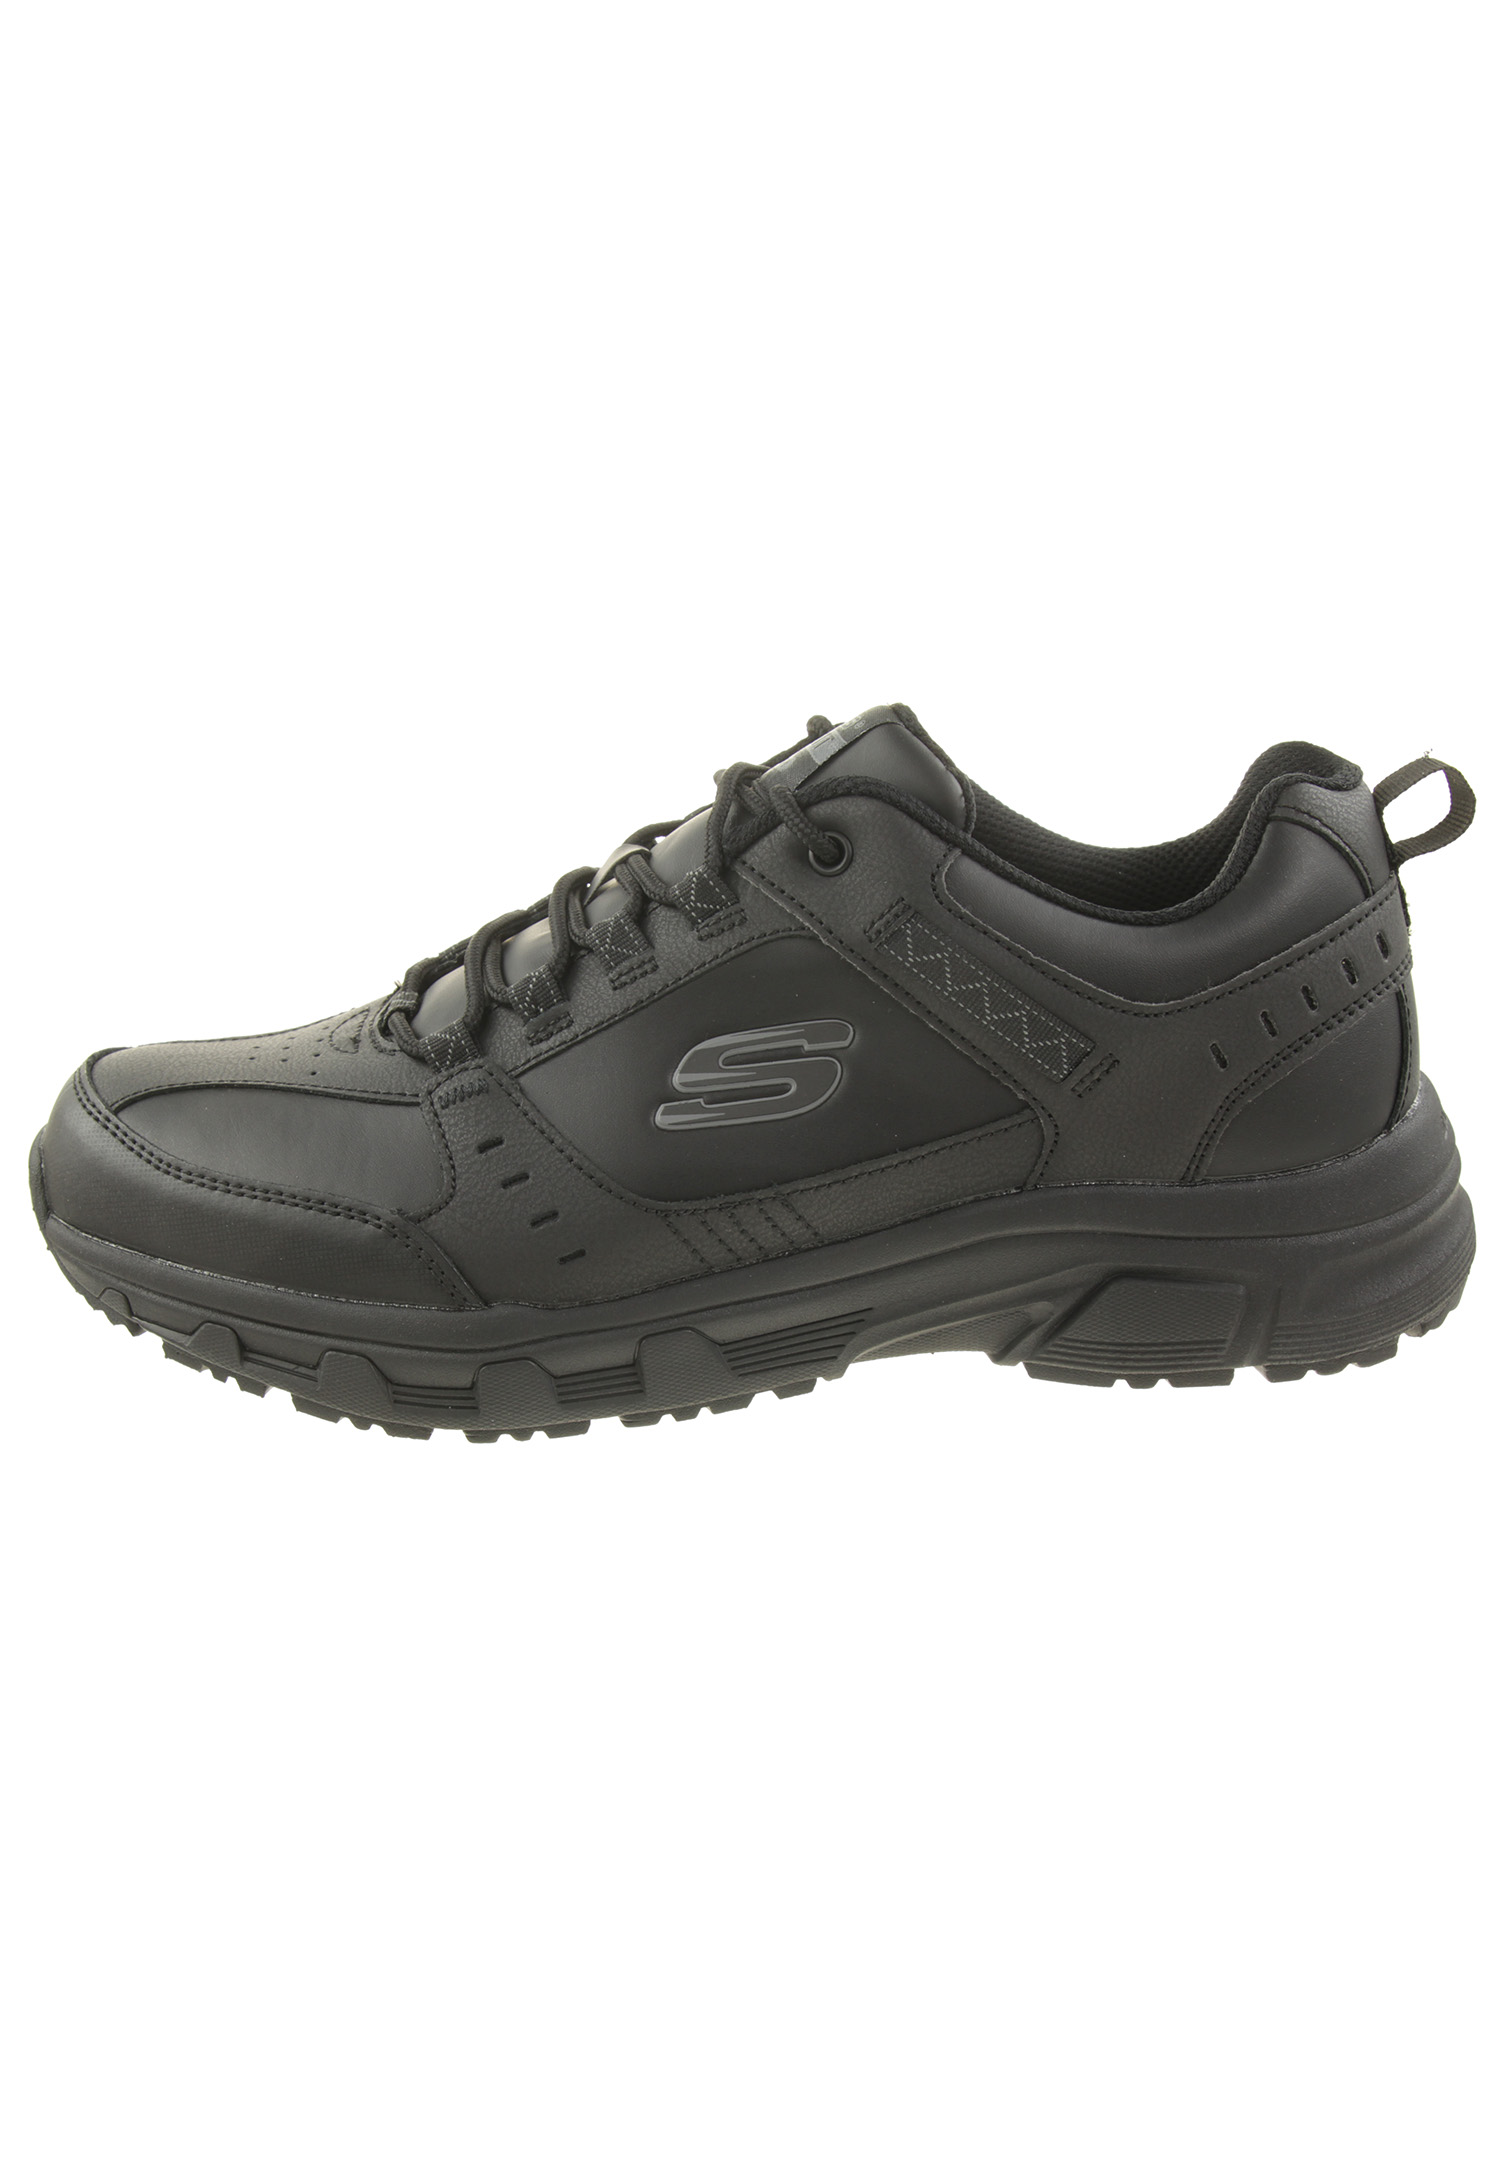 Skechers Outdoor Oak Canyon - REDWICK Herren Sneaker 51896 BBK schwarz